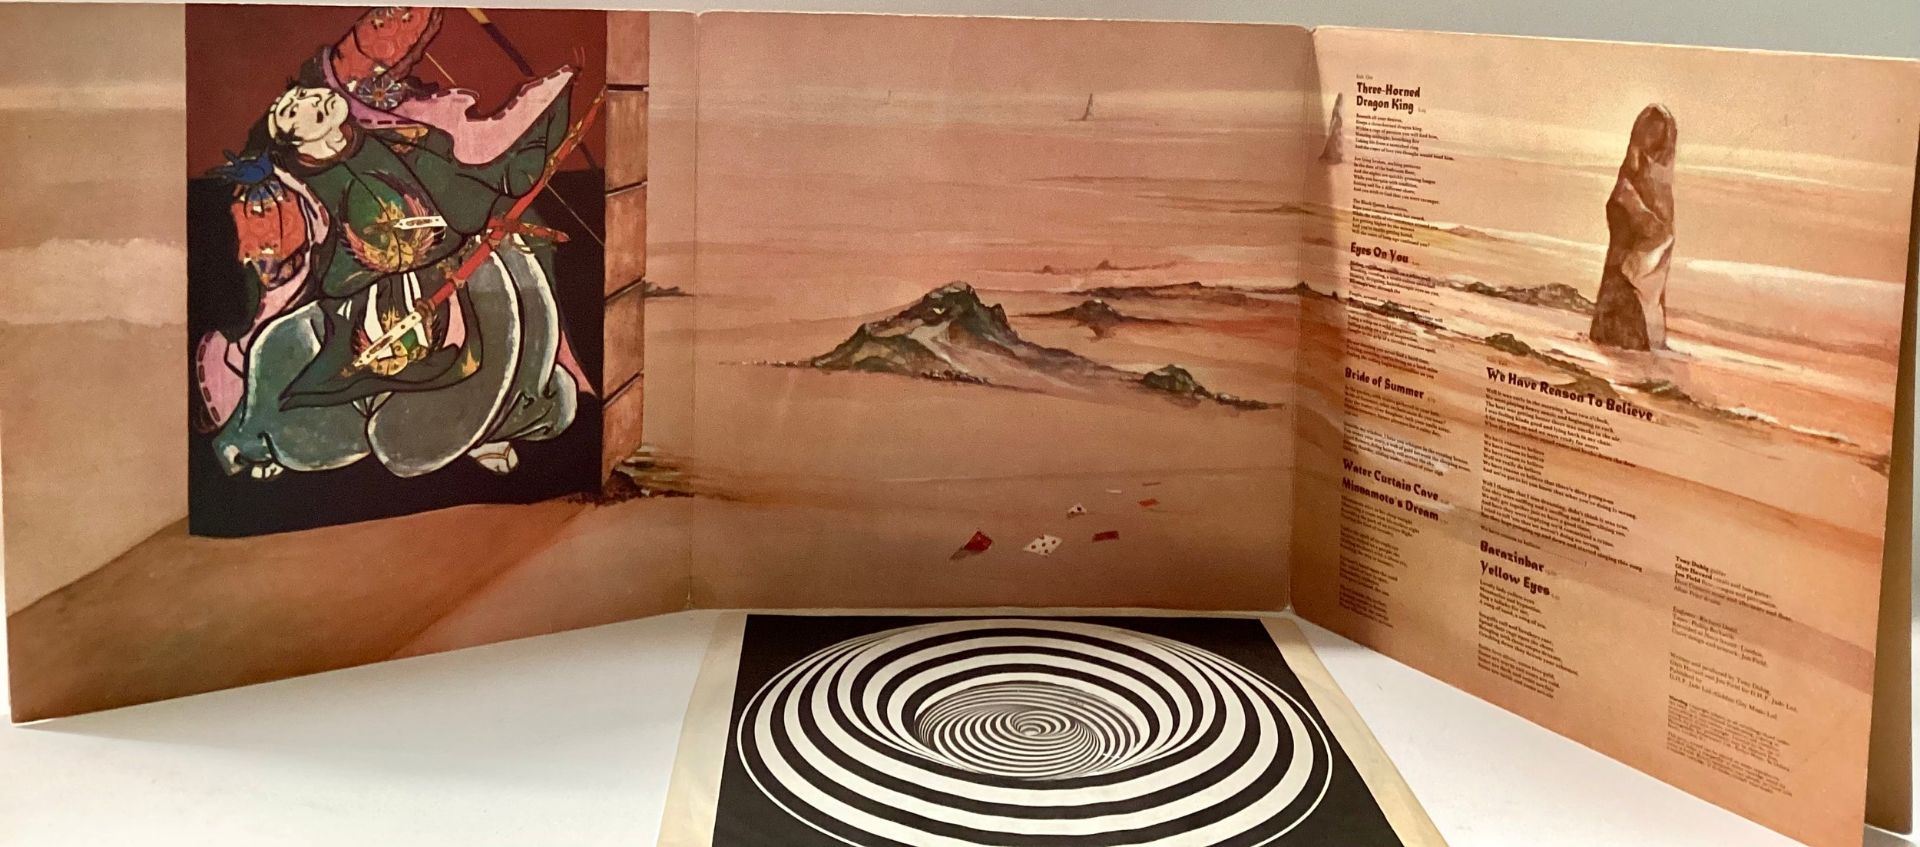 JADE WARRIOR VINYL VERTIGO SWIRL ALBUM ‘RELEASED’. This Ex condition album is from 1971 and on the - Image 3 of 9